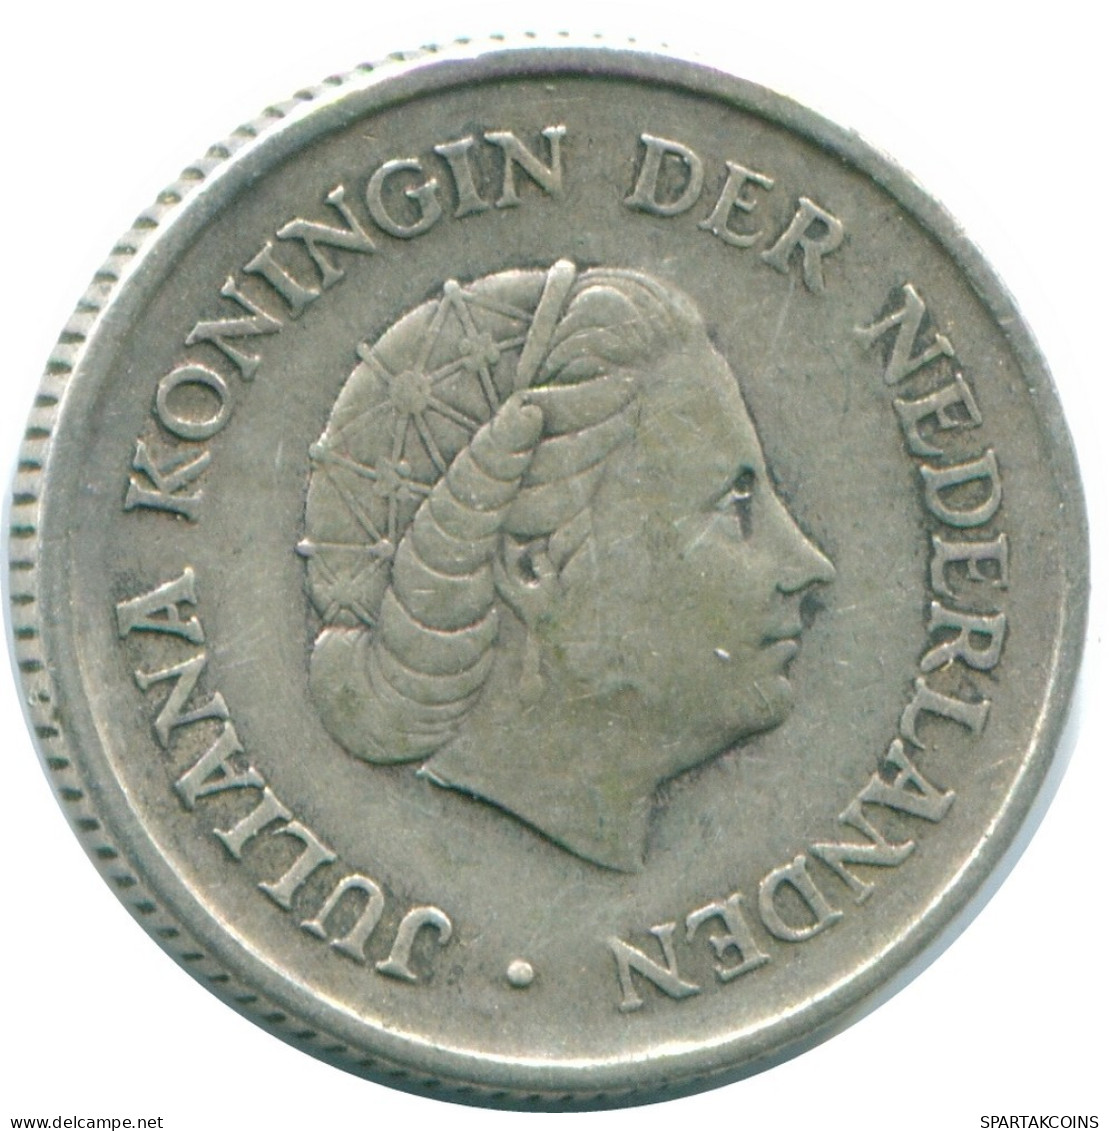 1/4 GULDEN 1965 NETHERLANDS ANTILLES SILVER Colonial Coin #NL11389.4.U.A - Netherlands Antilles